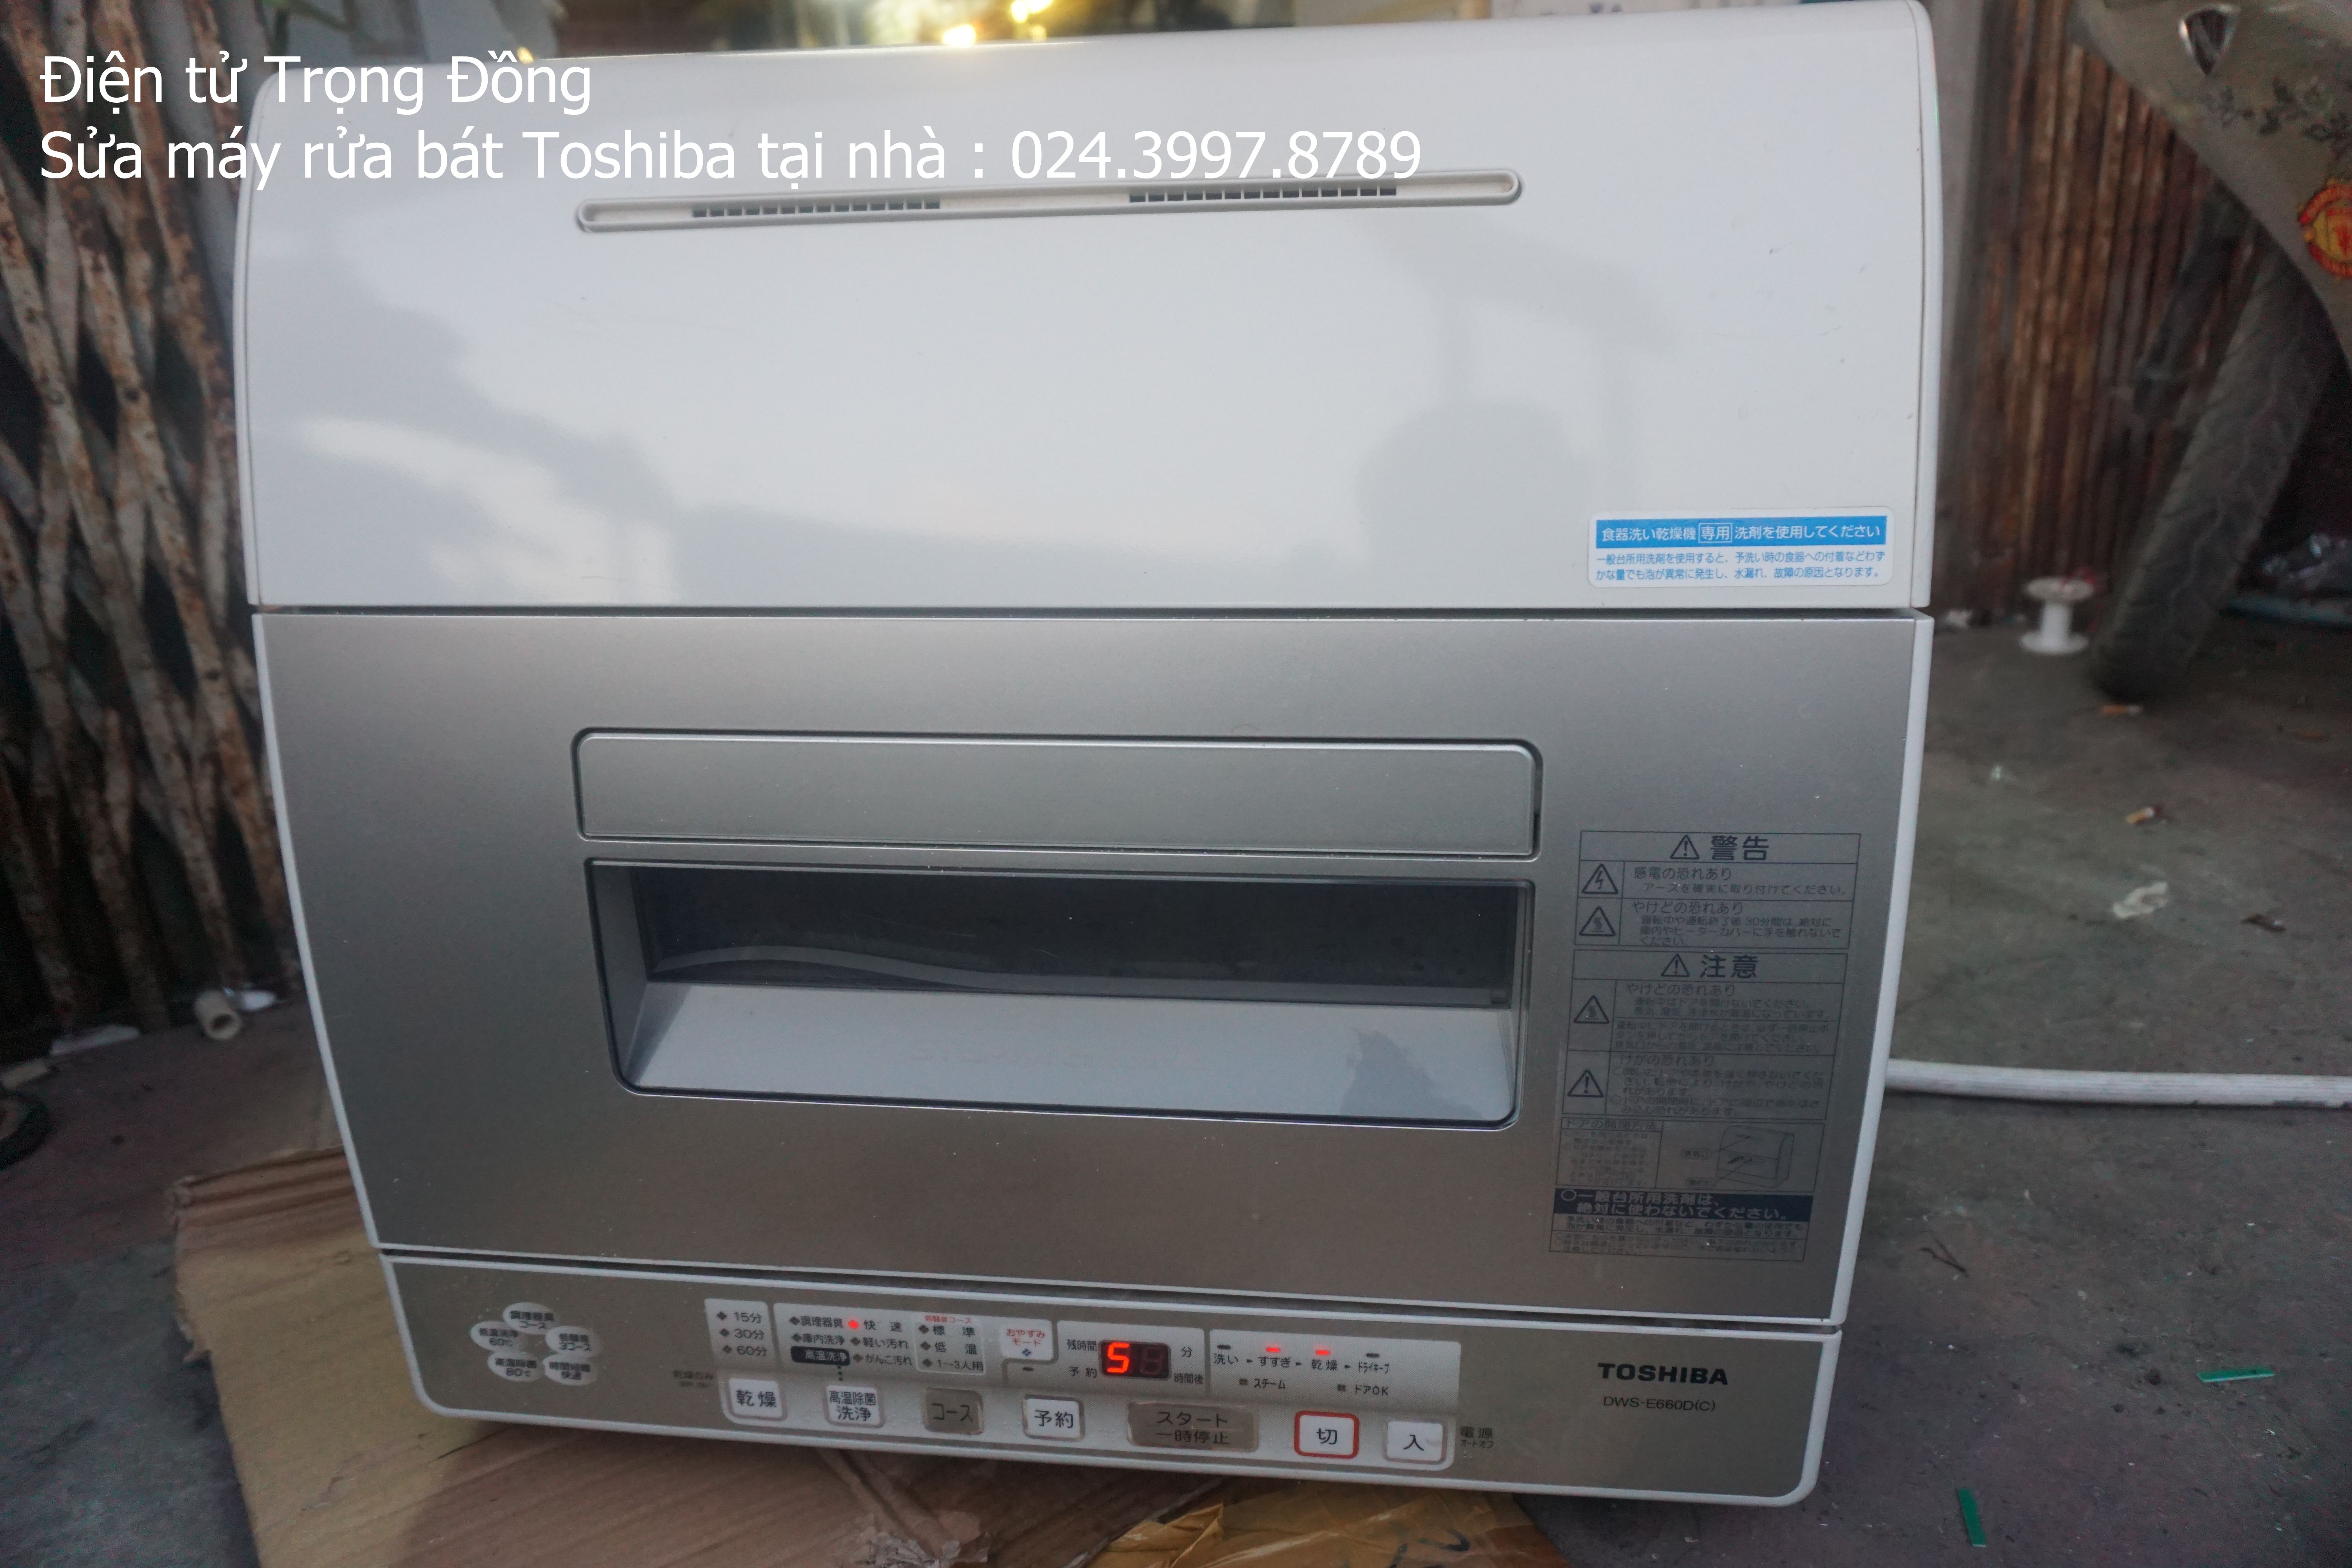 Sửa máy rửa bát Toshiba